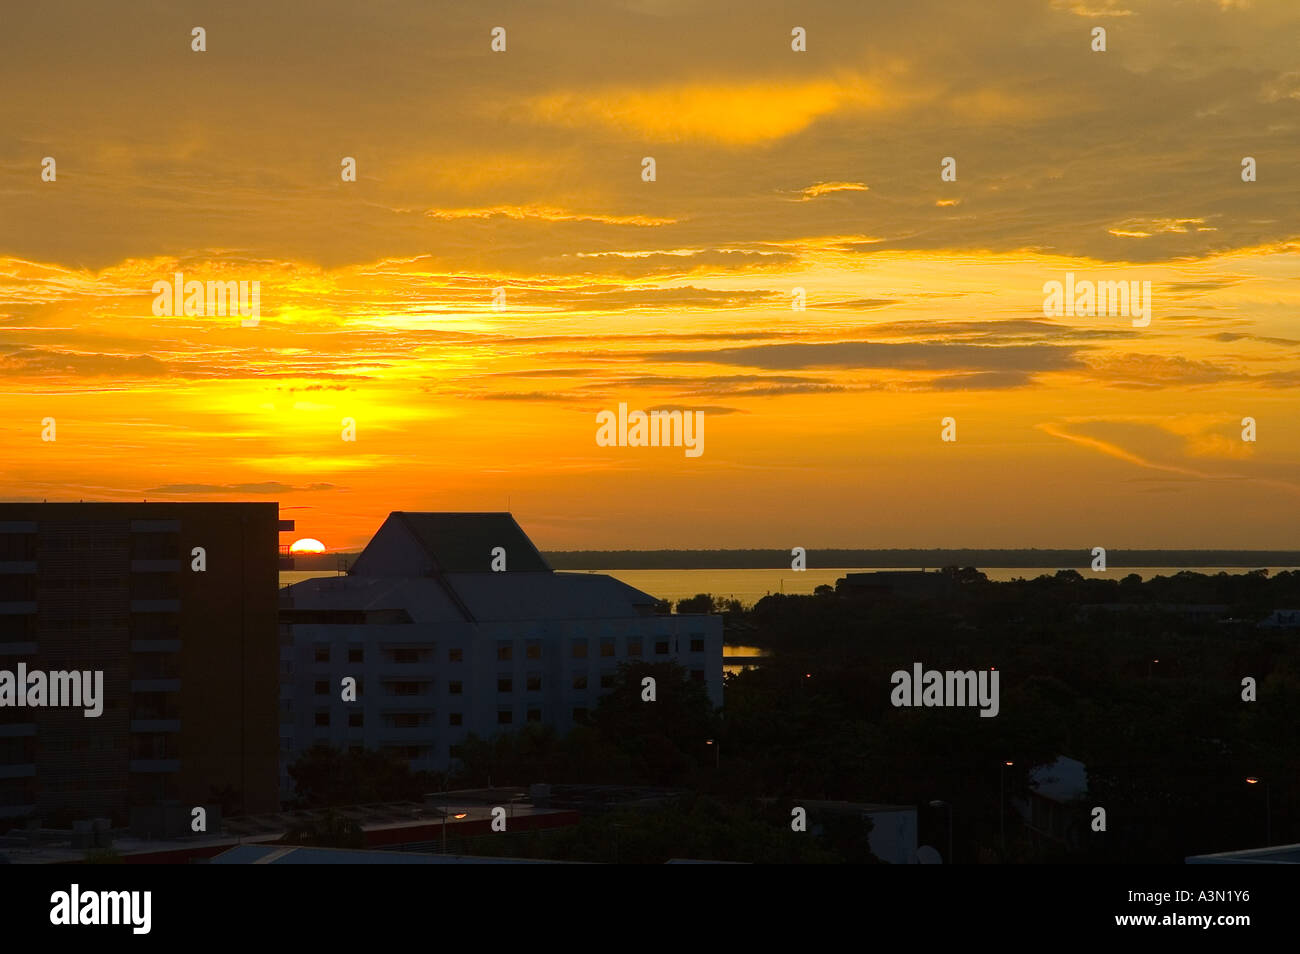 Sunset over city. Stock Photo